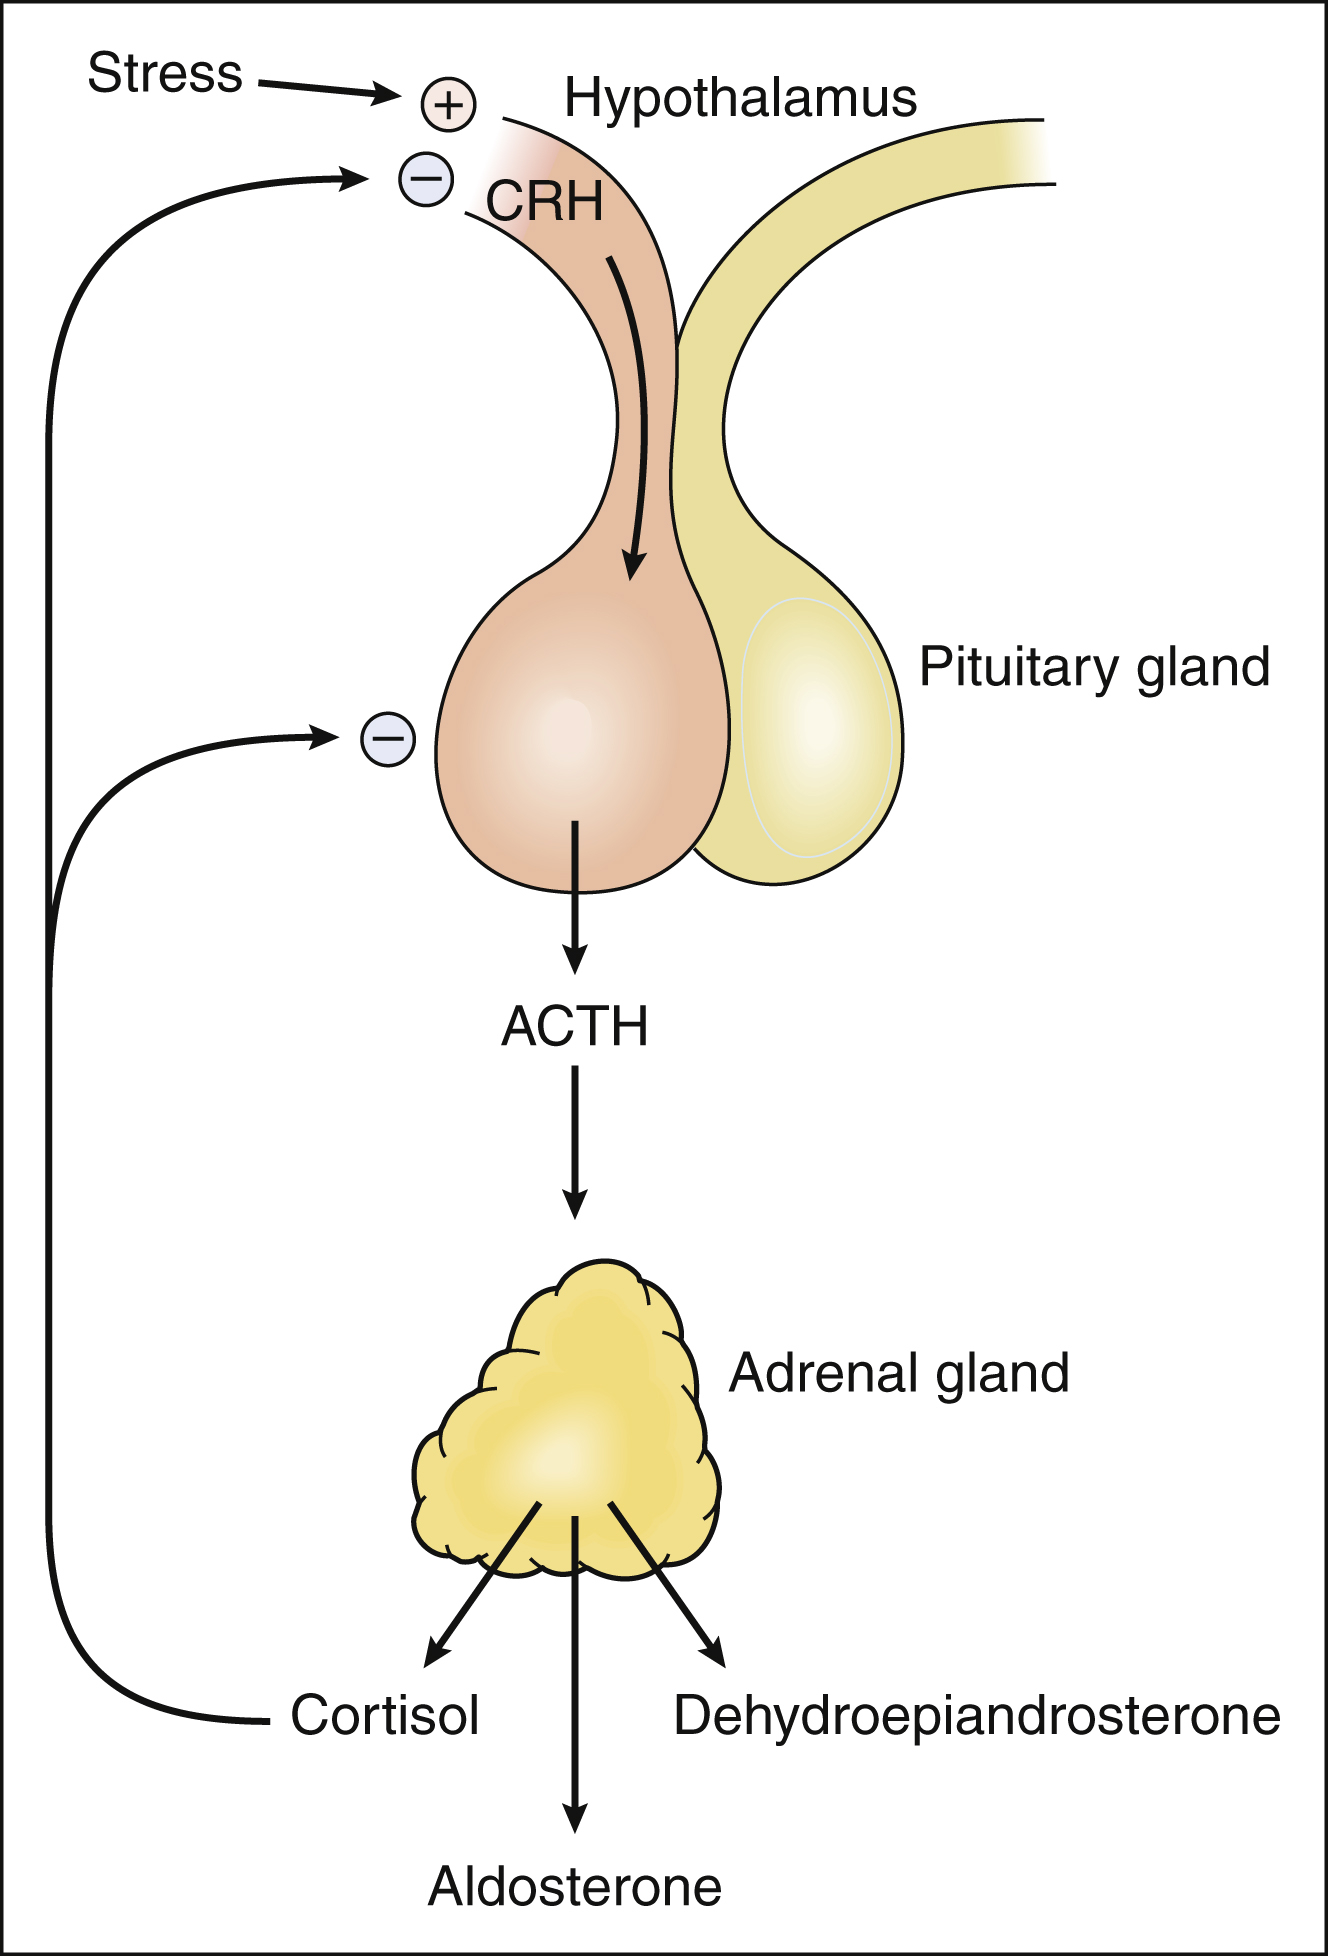 adrenal gland secretes